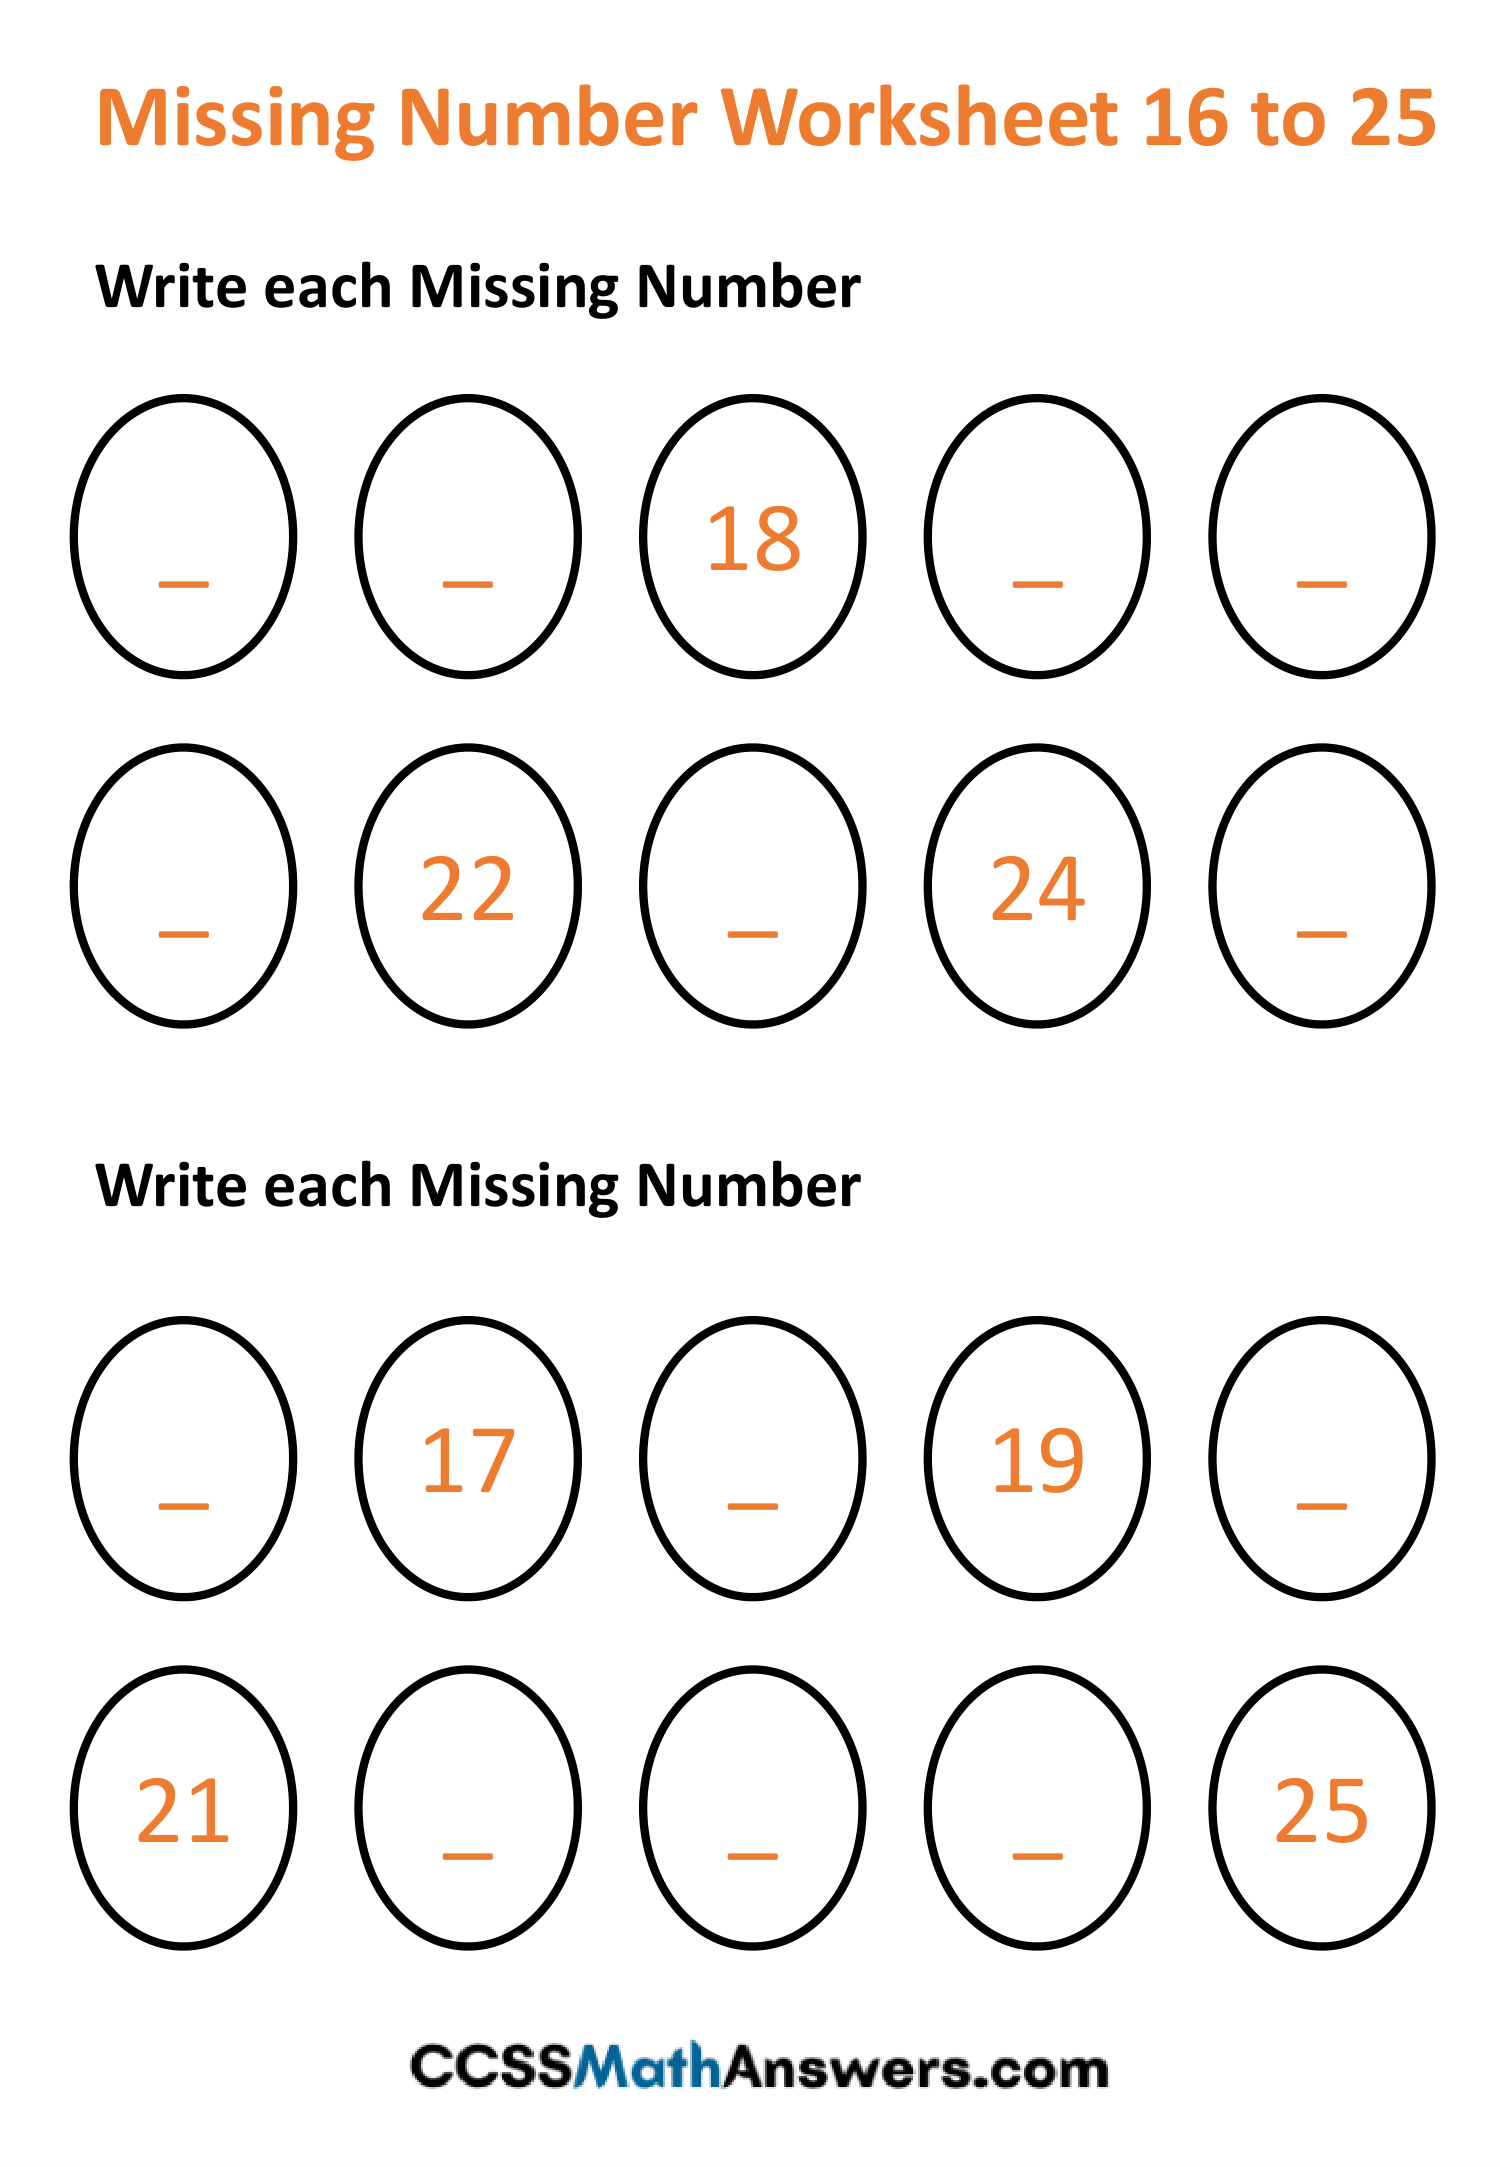 Missing Number Worksheets 16 to 25